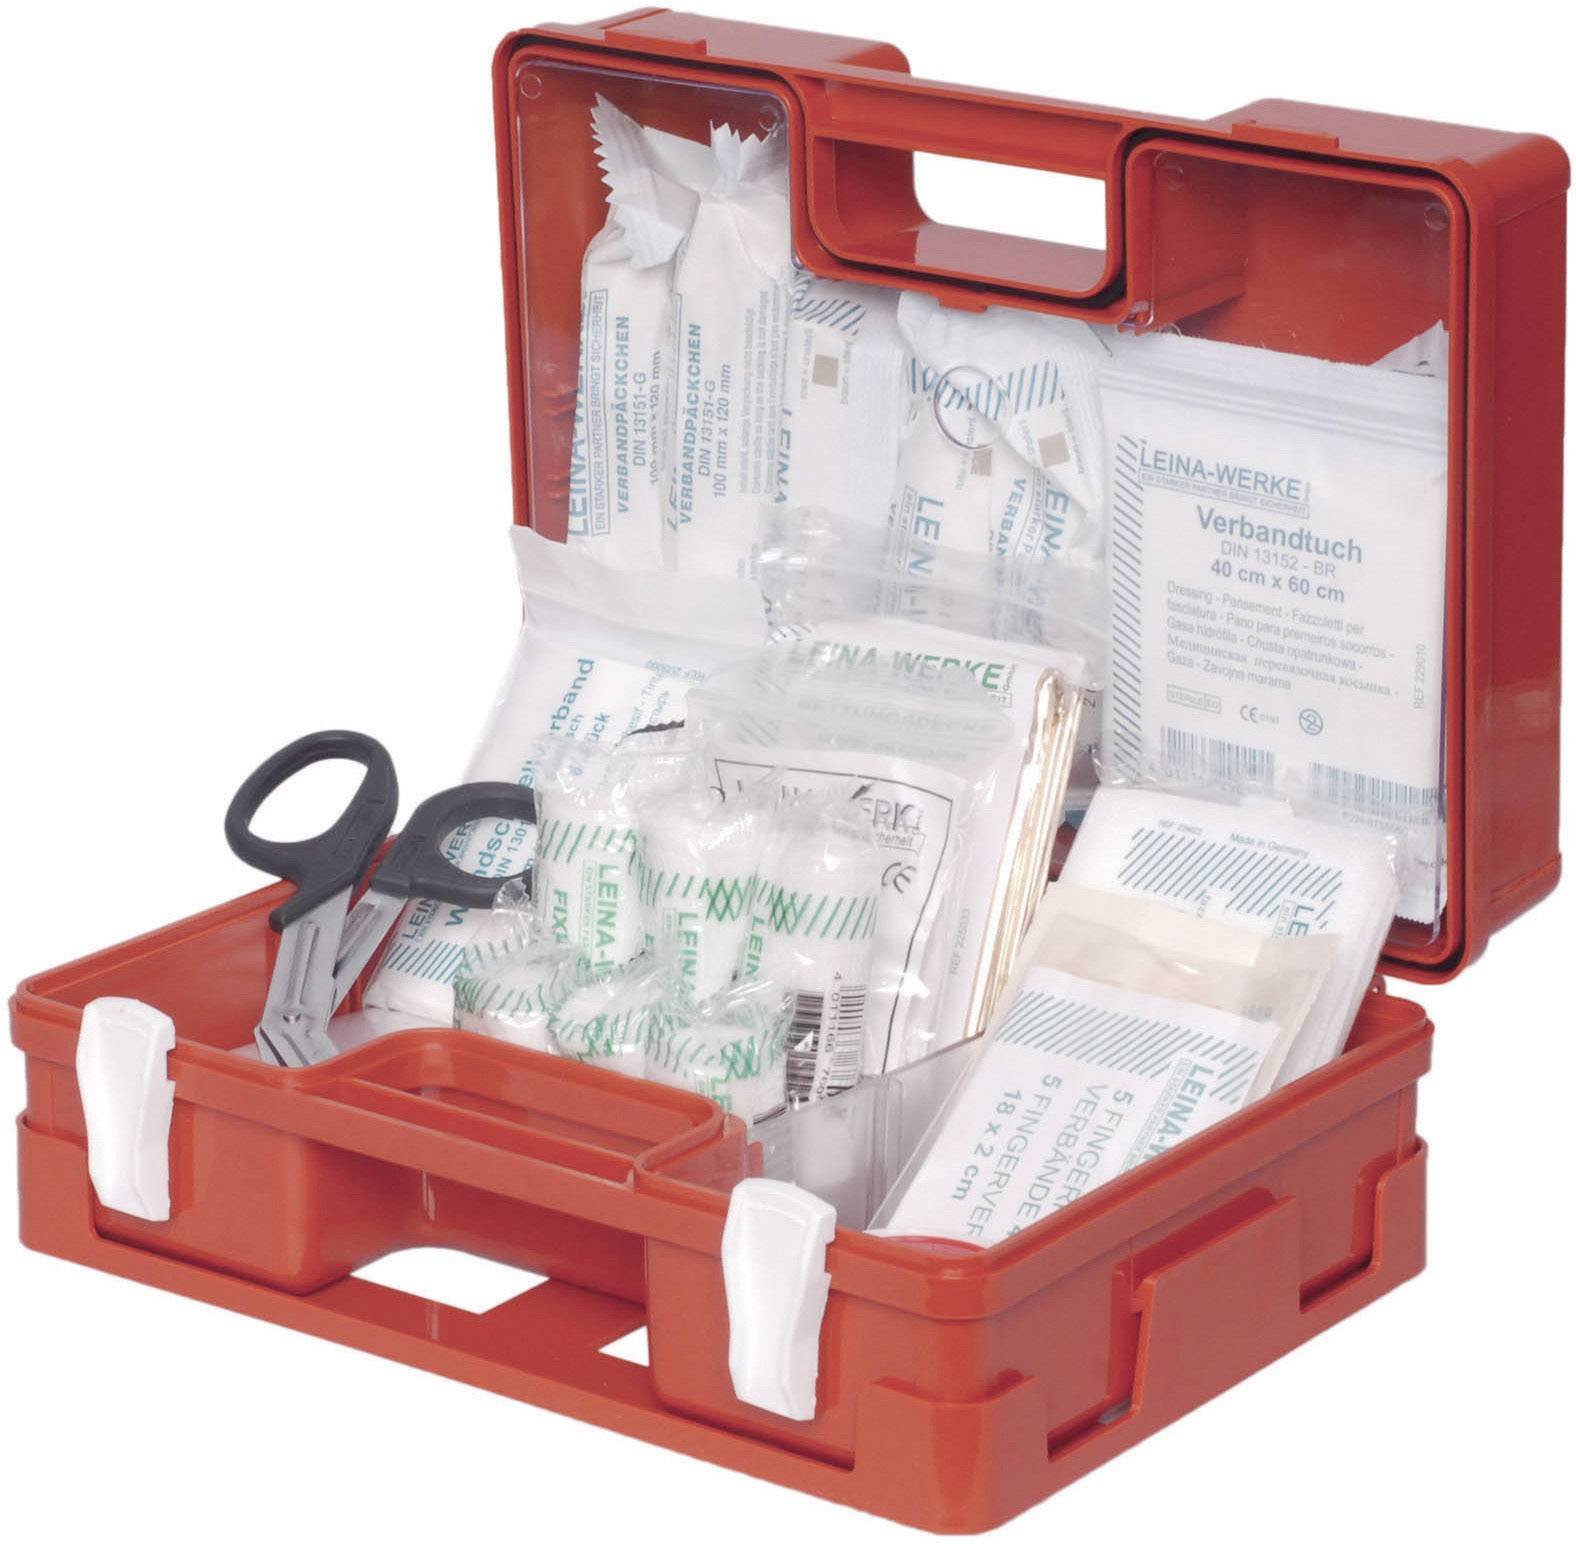 LEINA-WERKE 21035 Erste-Hilfe-Koffer SAN - DIN 13169 - orange